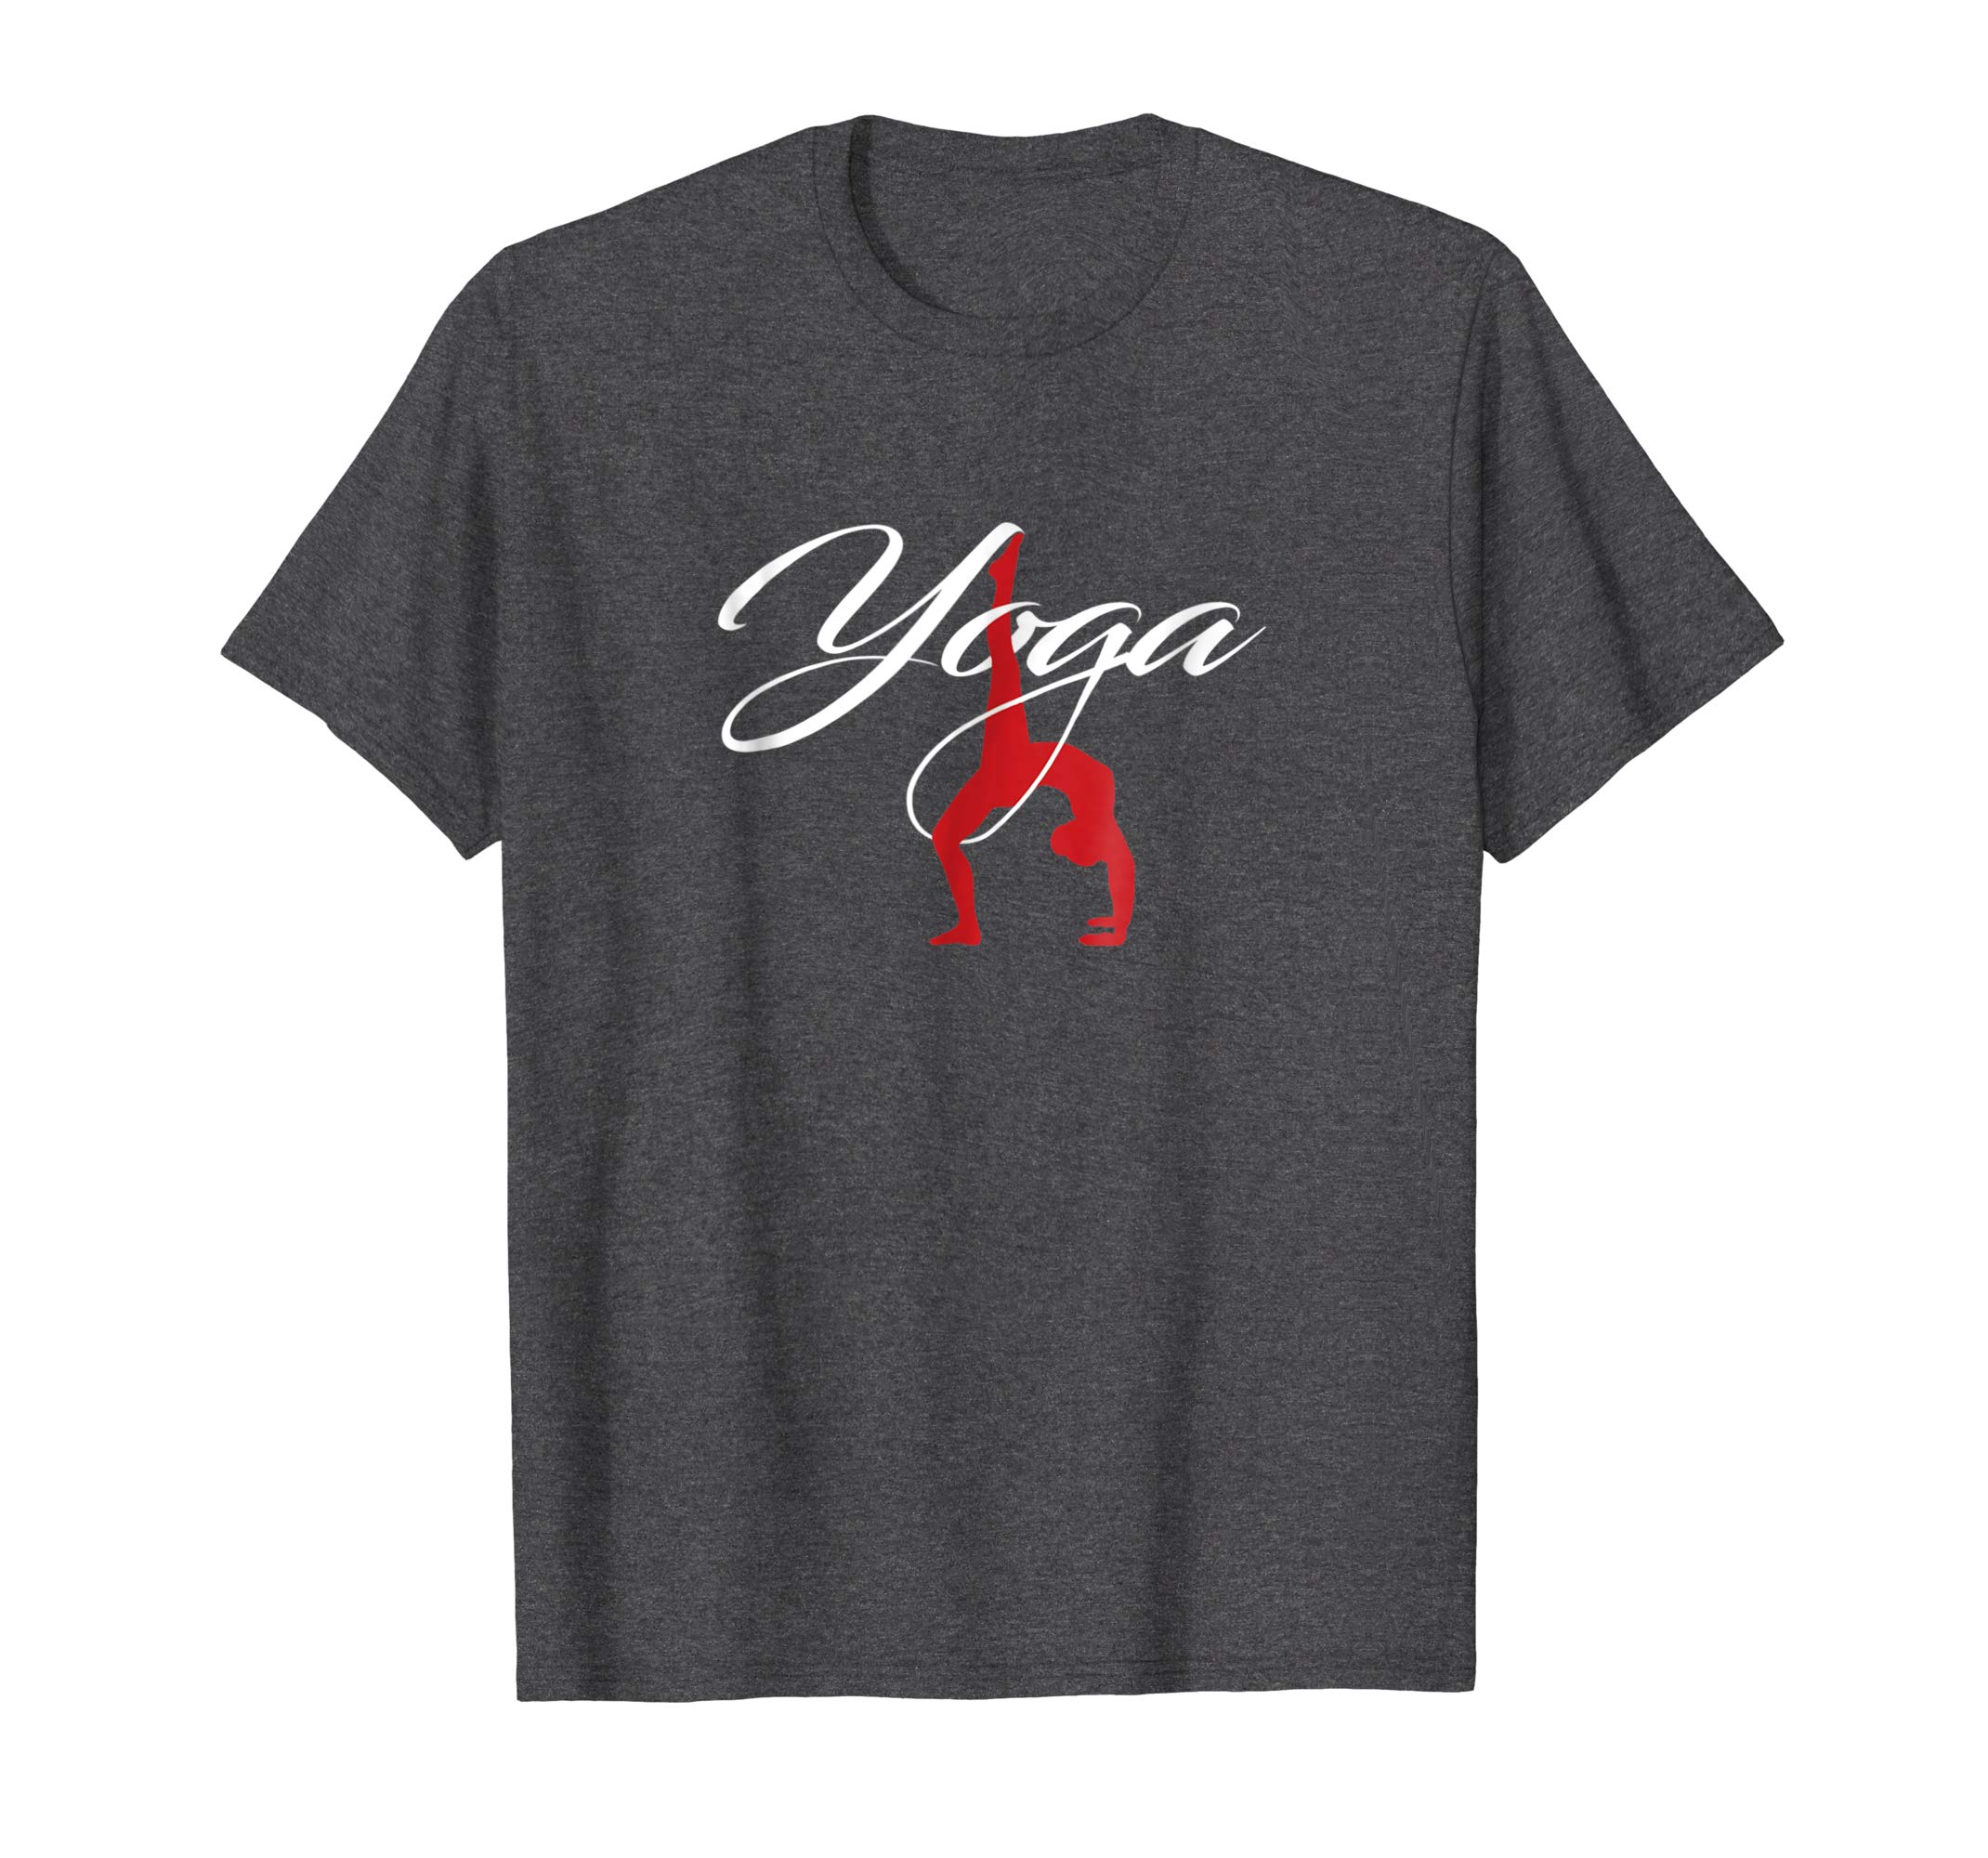 Yoga Apparel Logo - Amazon.com: Yoga Meditation T-Shirt - Yoga Logo Shirt for Women Men ...